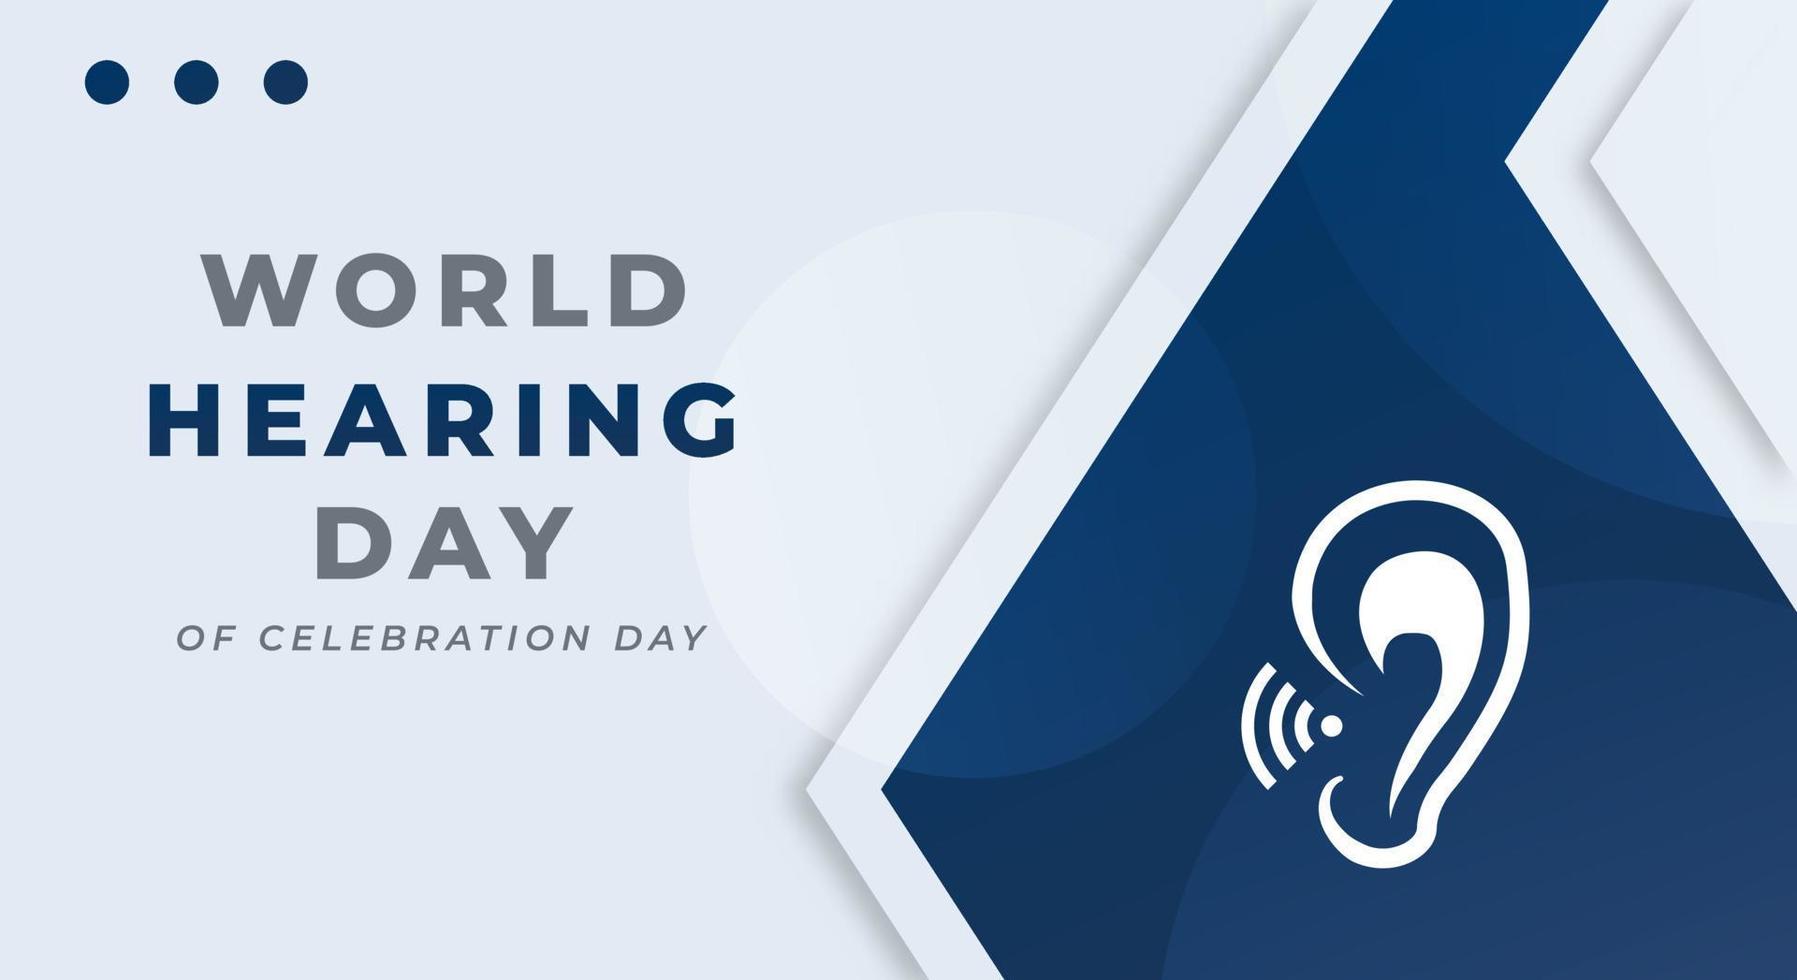 World Hearing Day Celebration Vector Design Illustration for Background, Poster, Banner, Advertising, Greeting Card